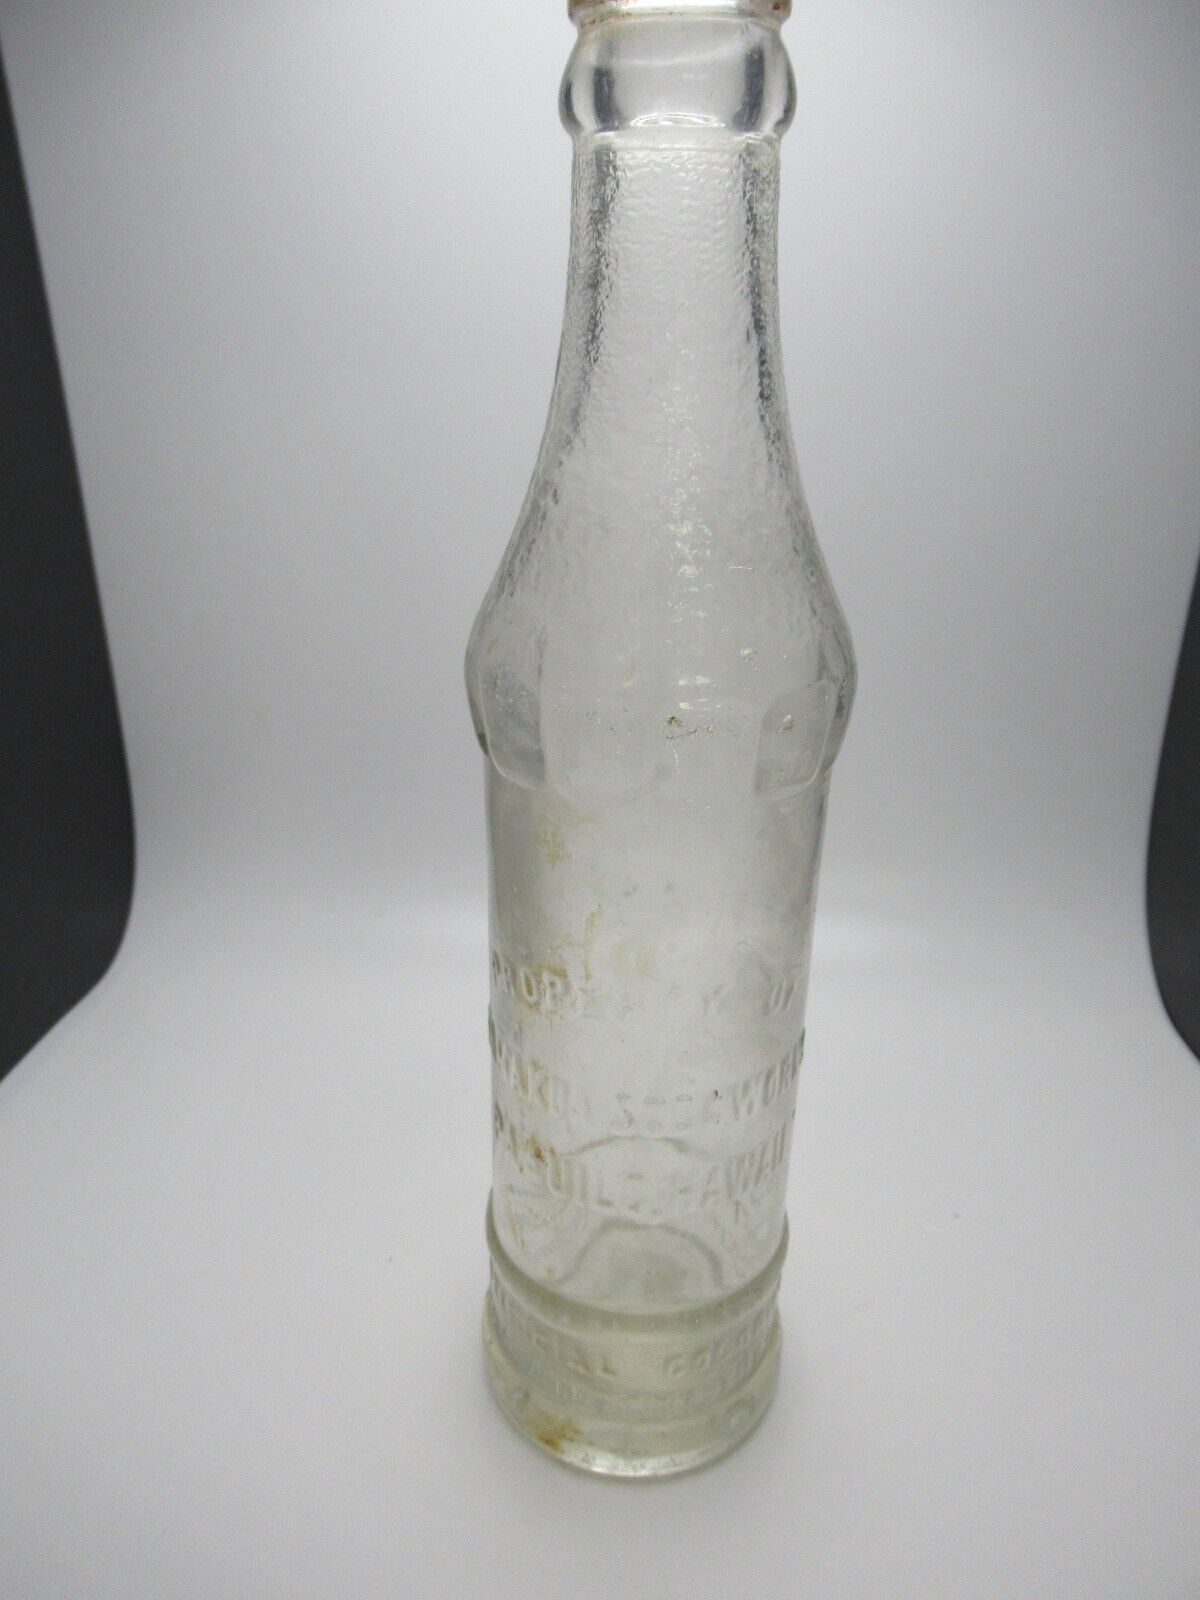 Hamakua Soda Works Paauilo Clear Glass Embossed Bottle